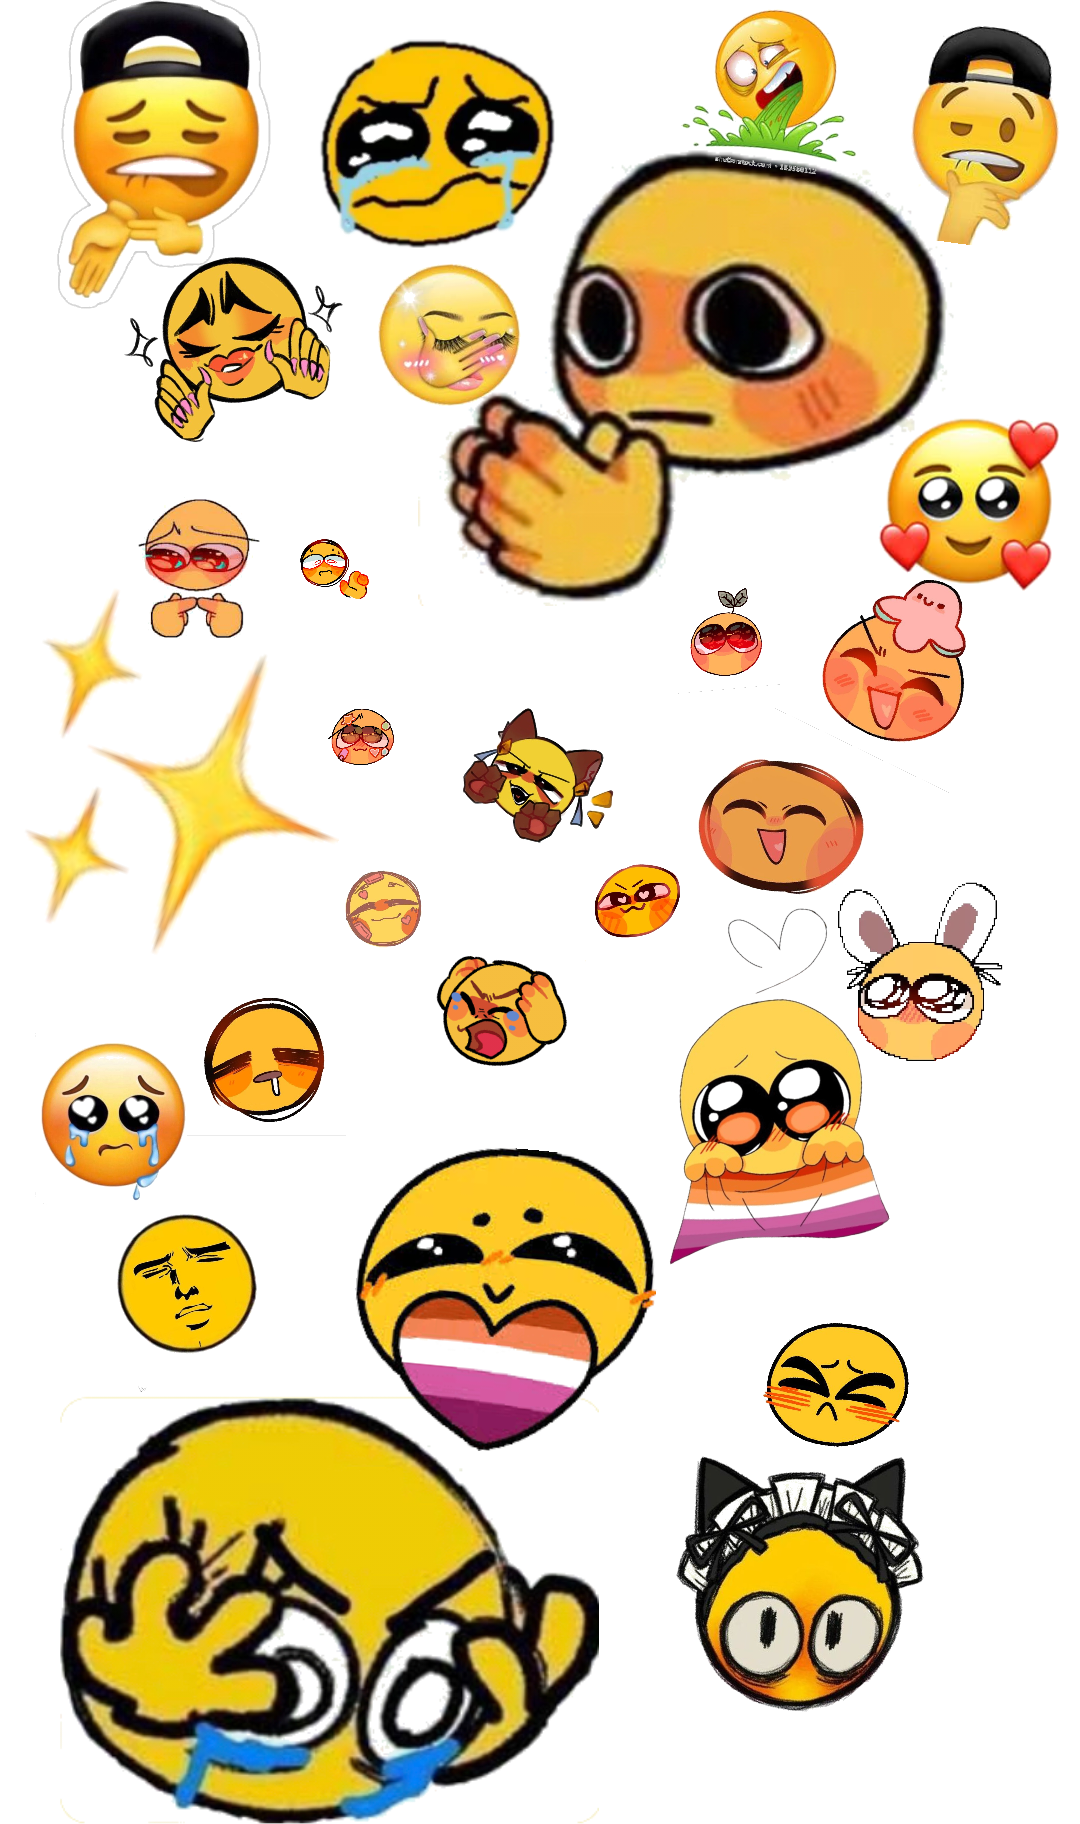 Cursed emojis - Stickers for WhatsApp